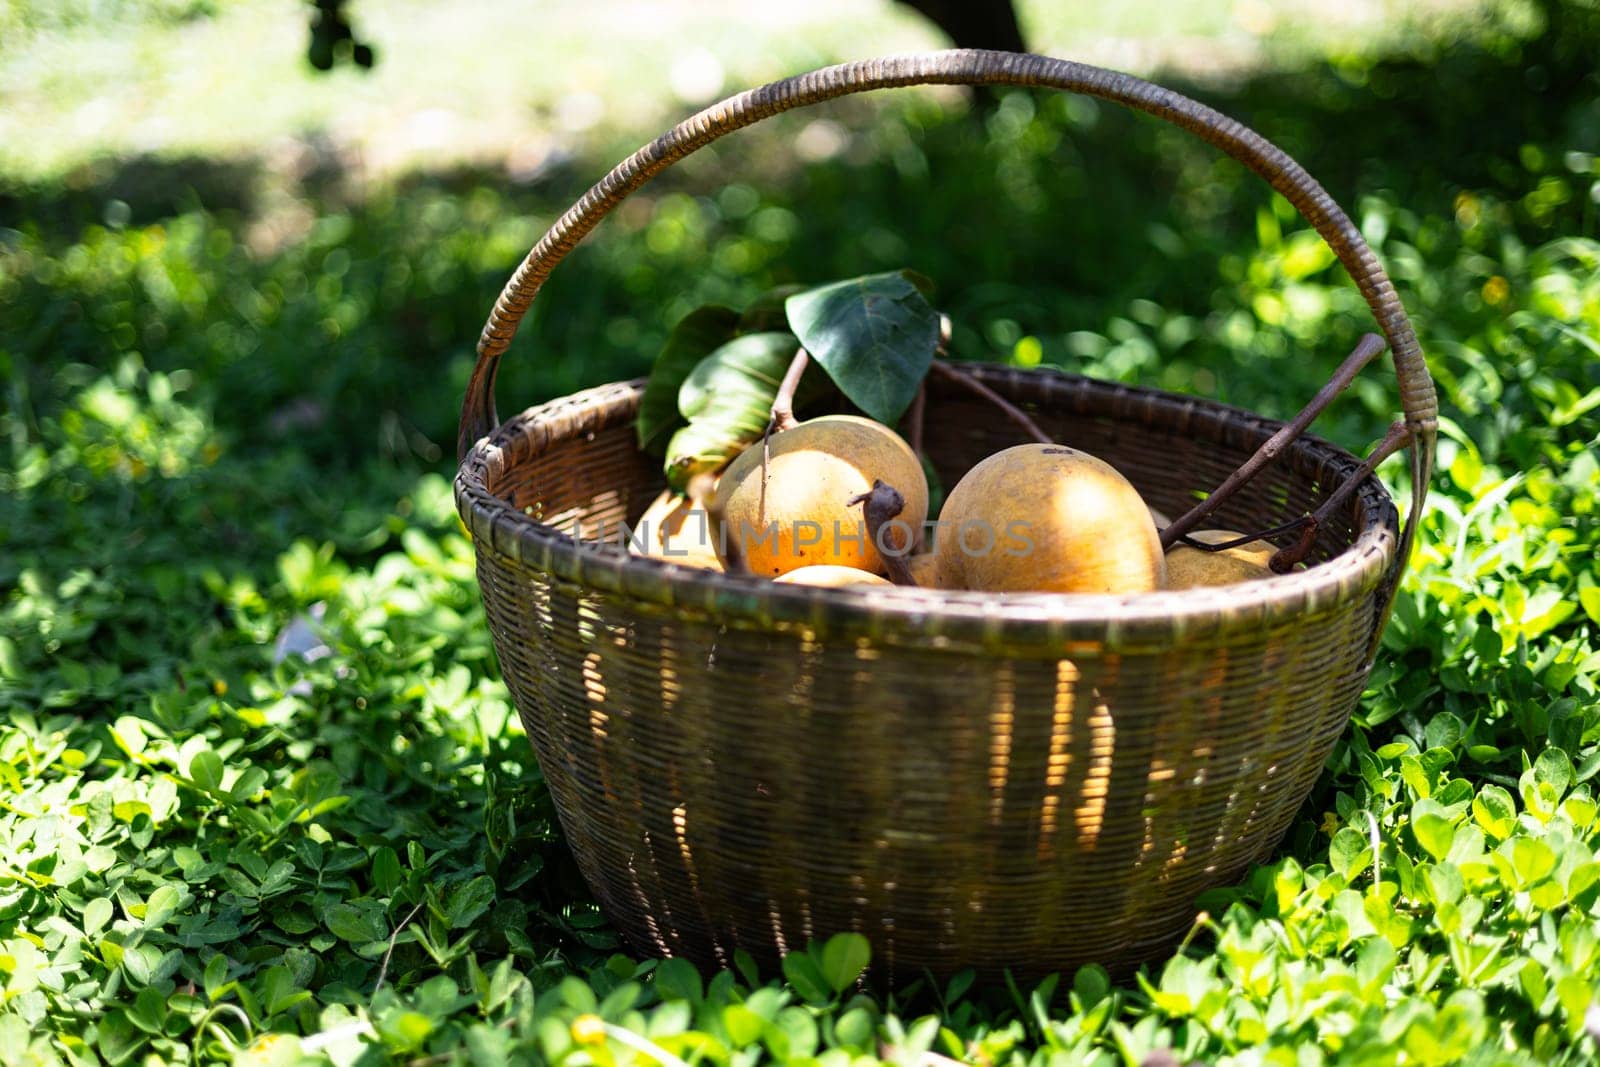 Santol Fruit In A Basket In The Garden by urzine